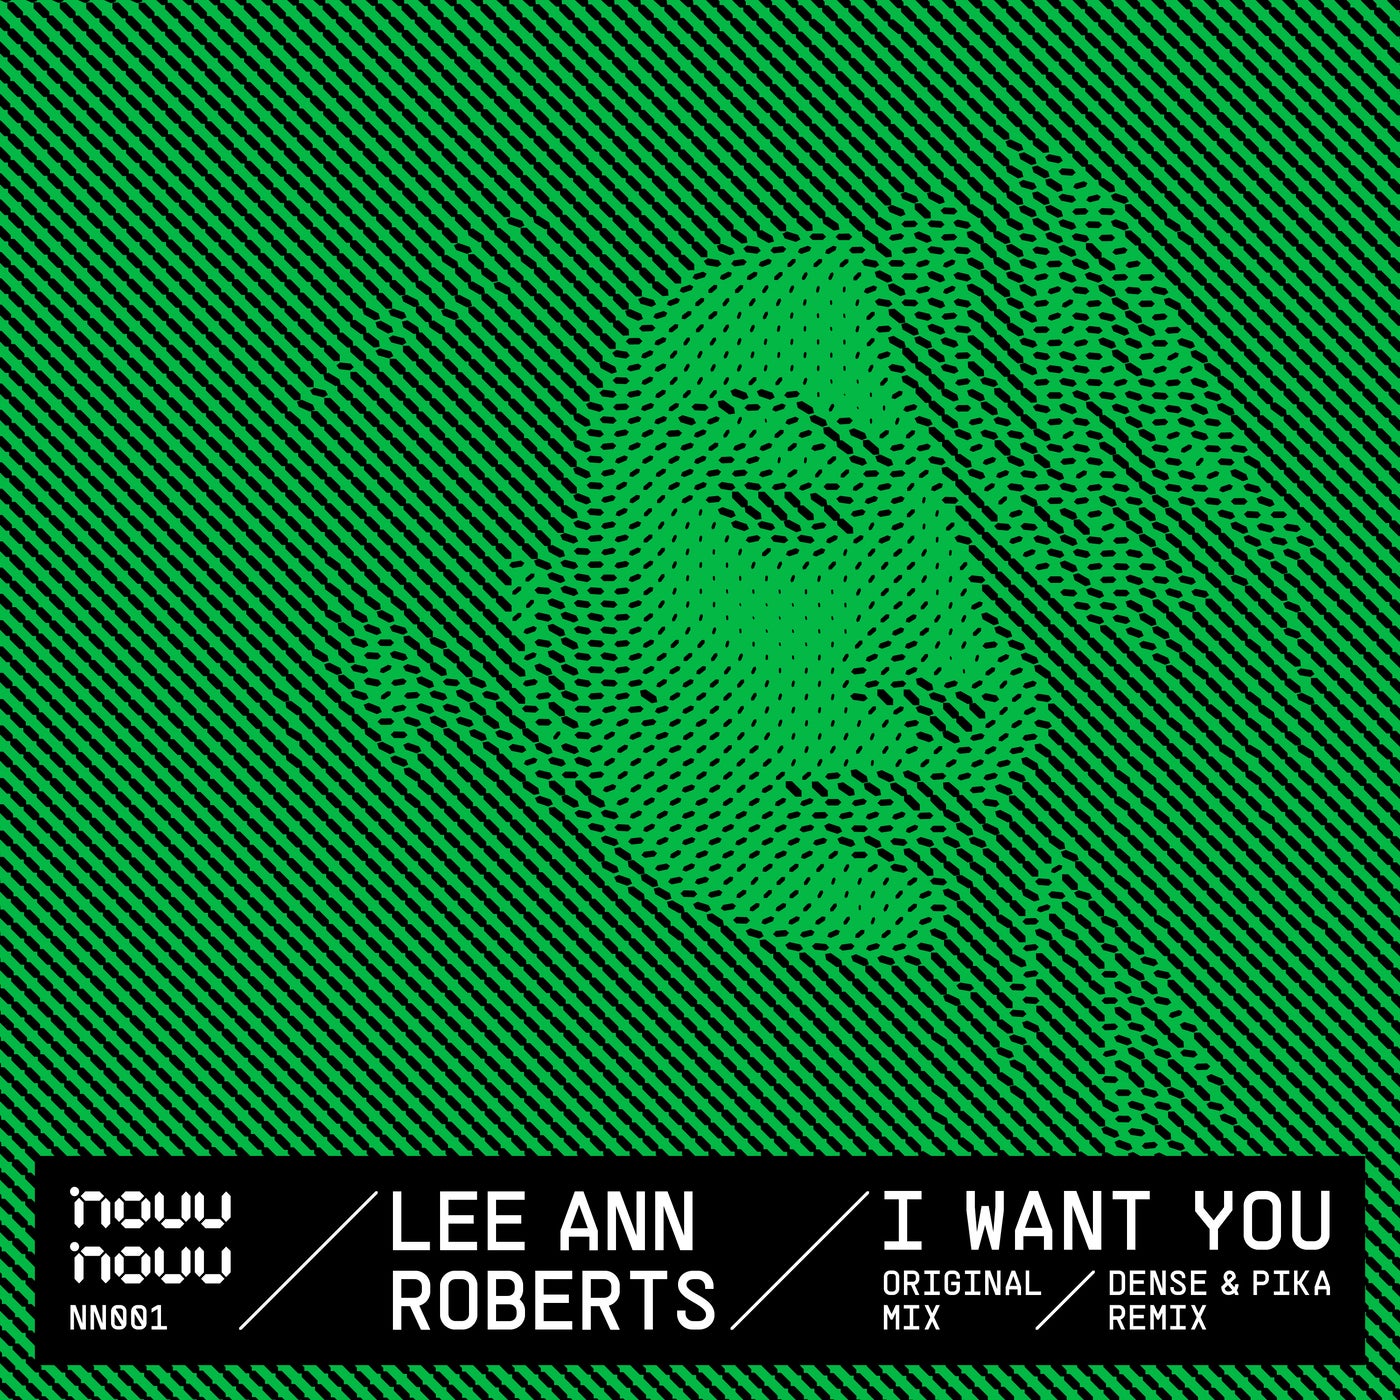 image cover: Lee Ann Roberts - I Want You / NN001